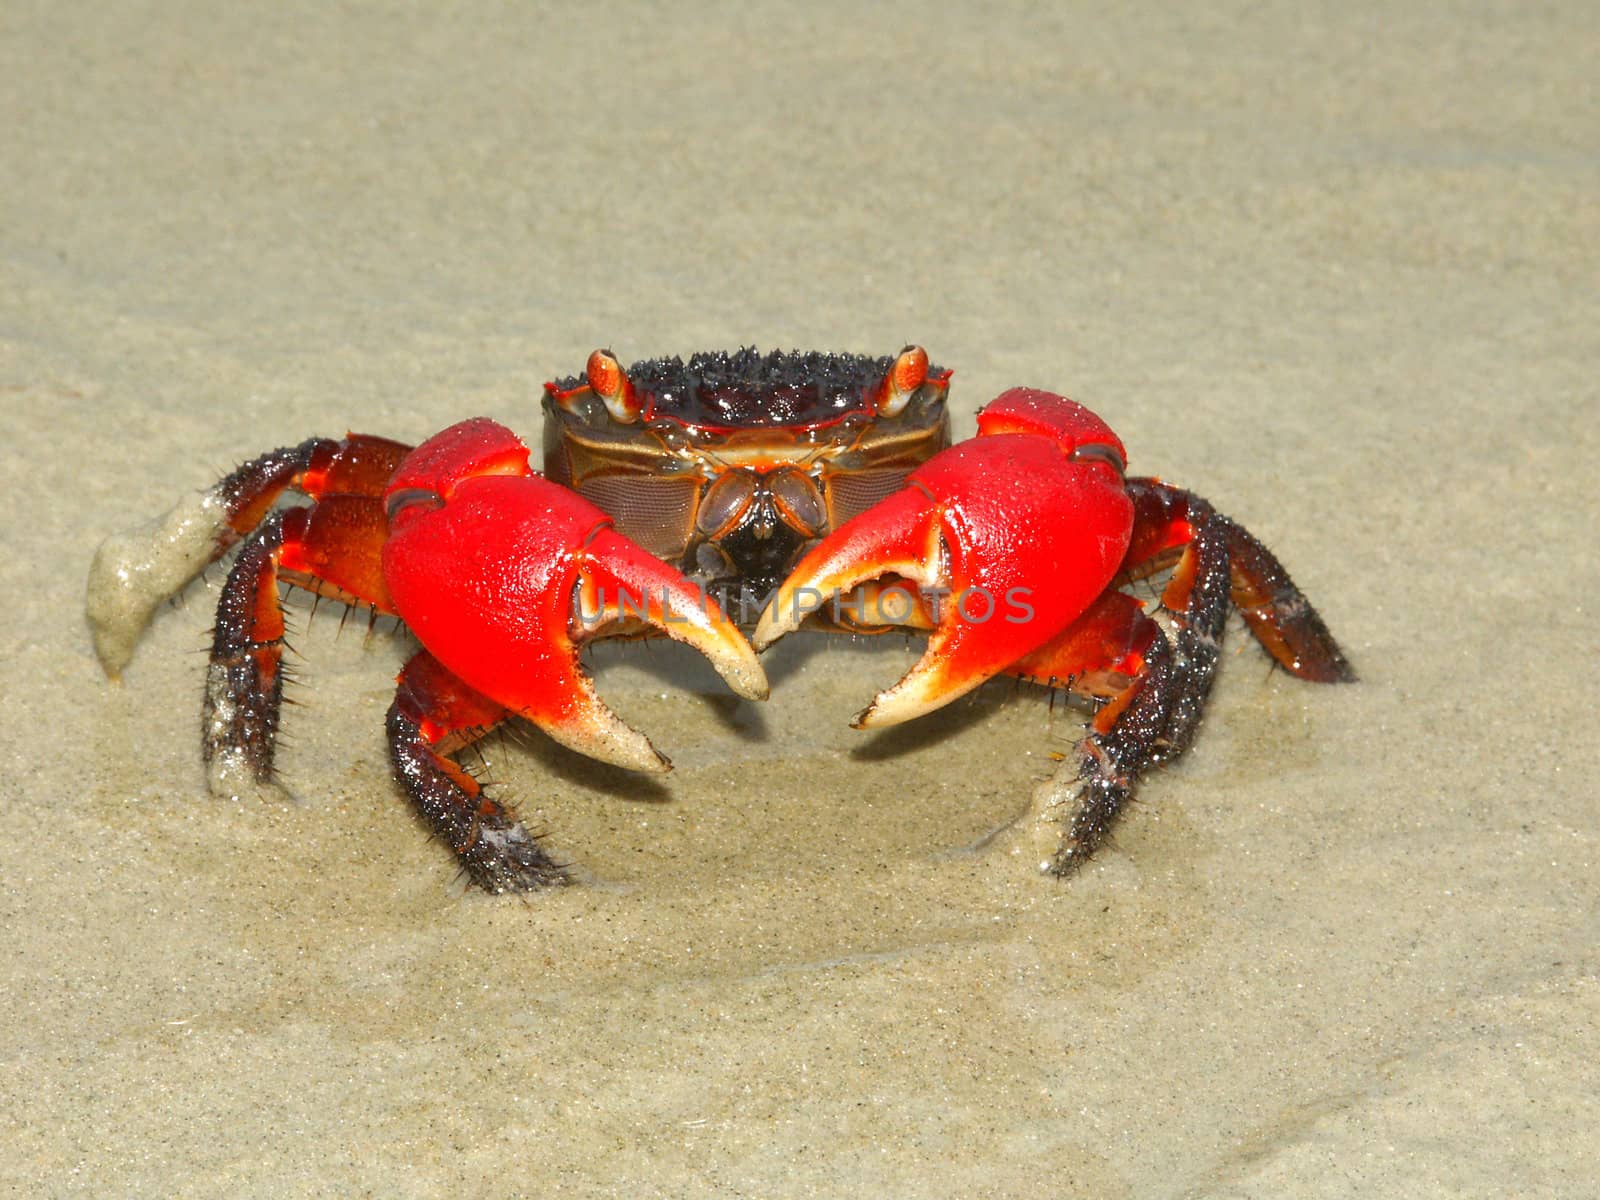 A Mangrove Crab on the beach near Cape Tribulation in Queensland, Australia.